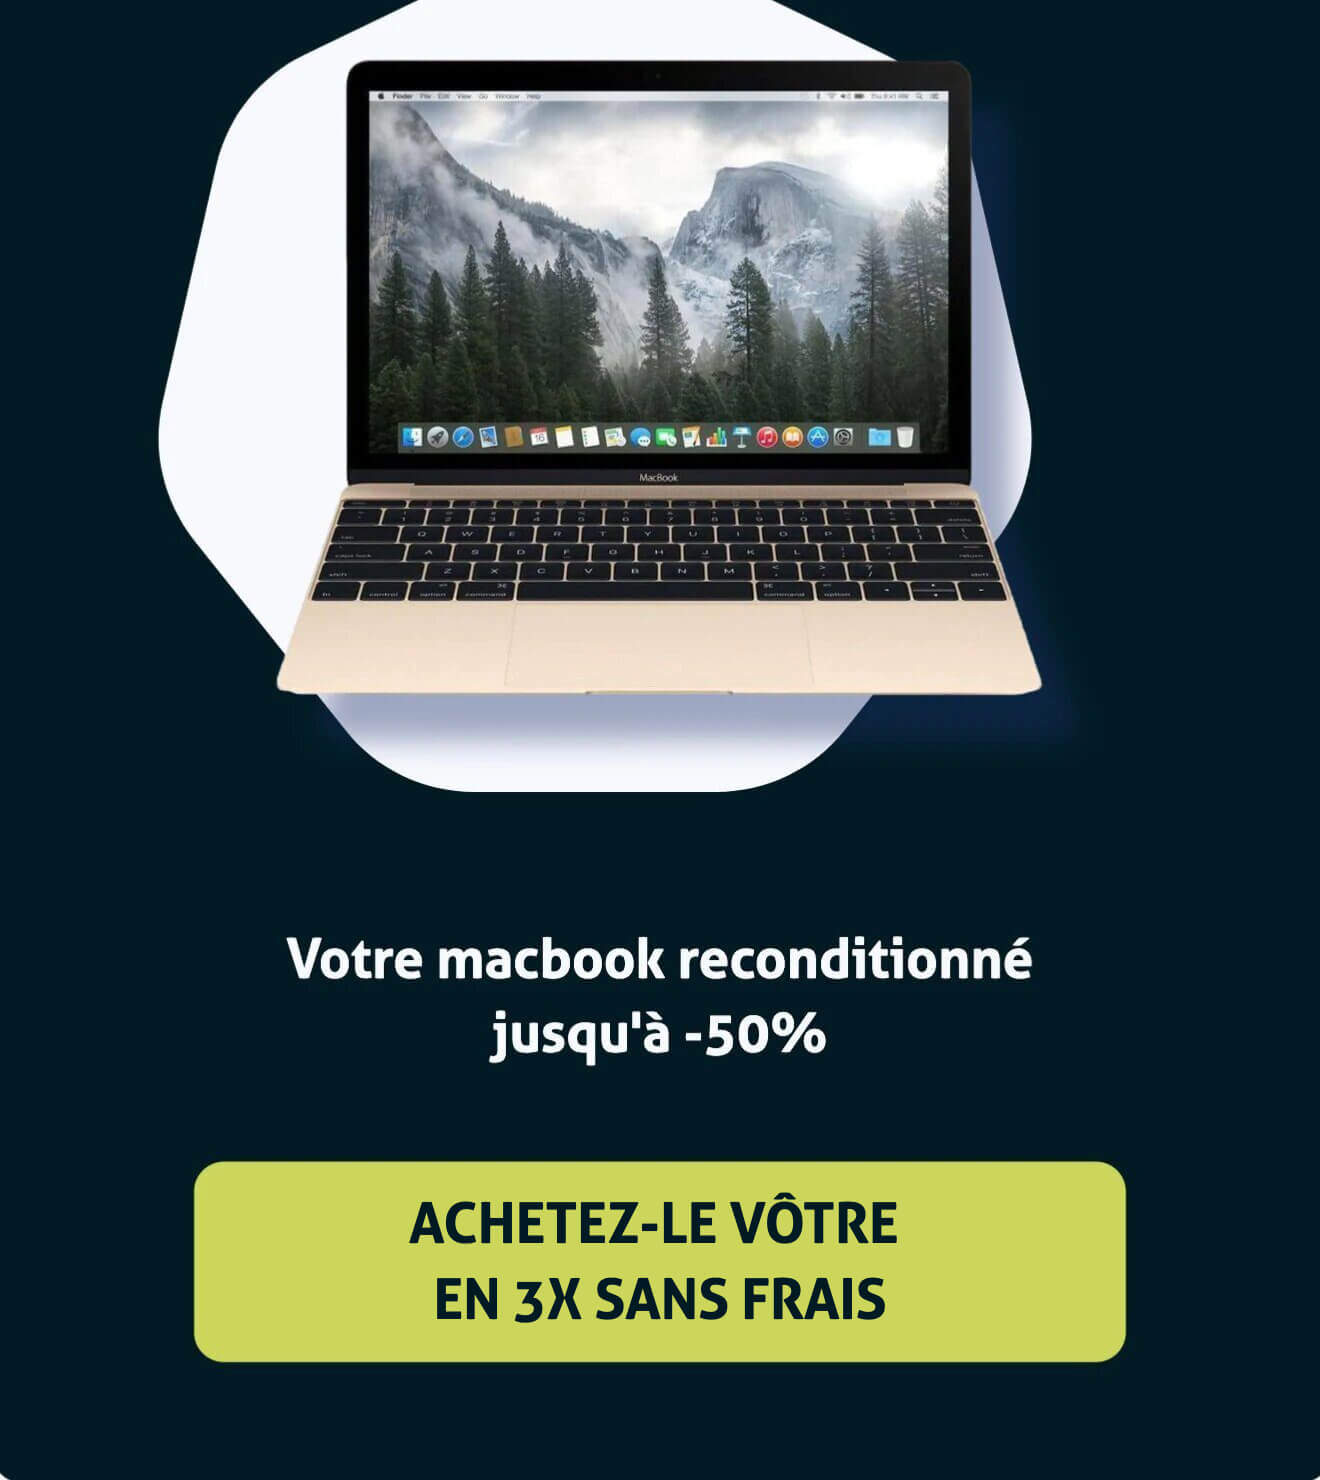 Remake France : macbook, iPad, iMac et iPhone Apple reconditionnés